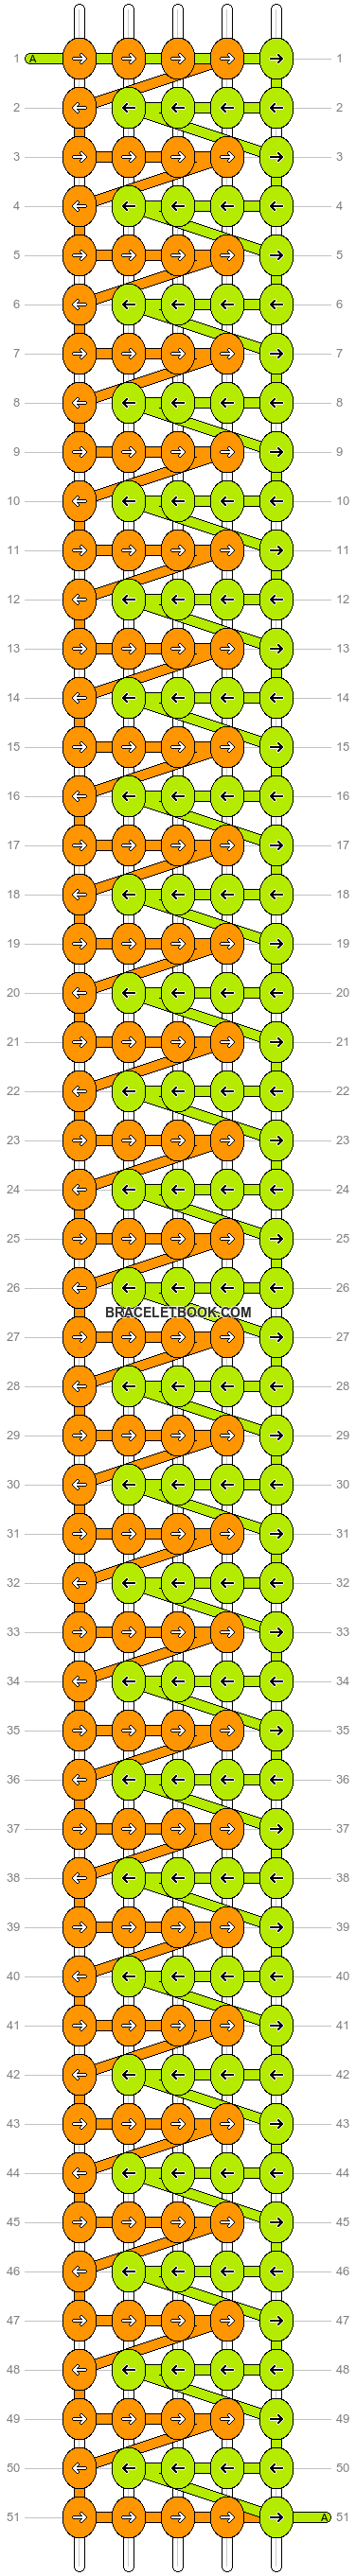 Alpha pattern #11523 variation #69066 pattern